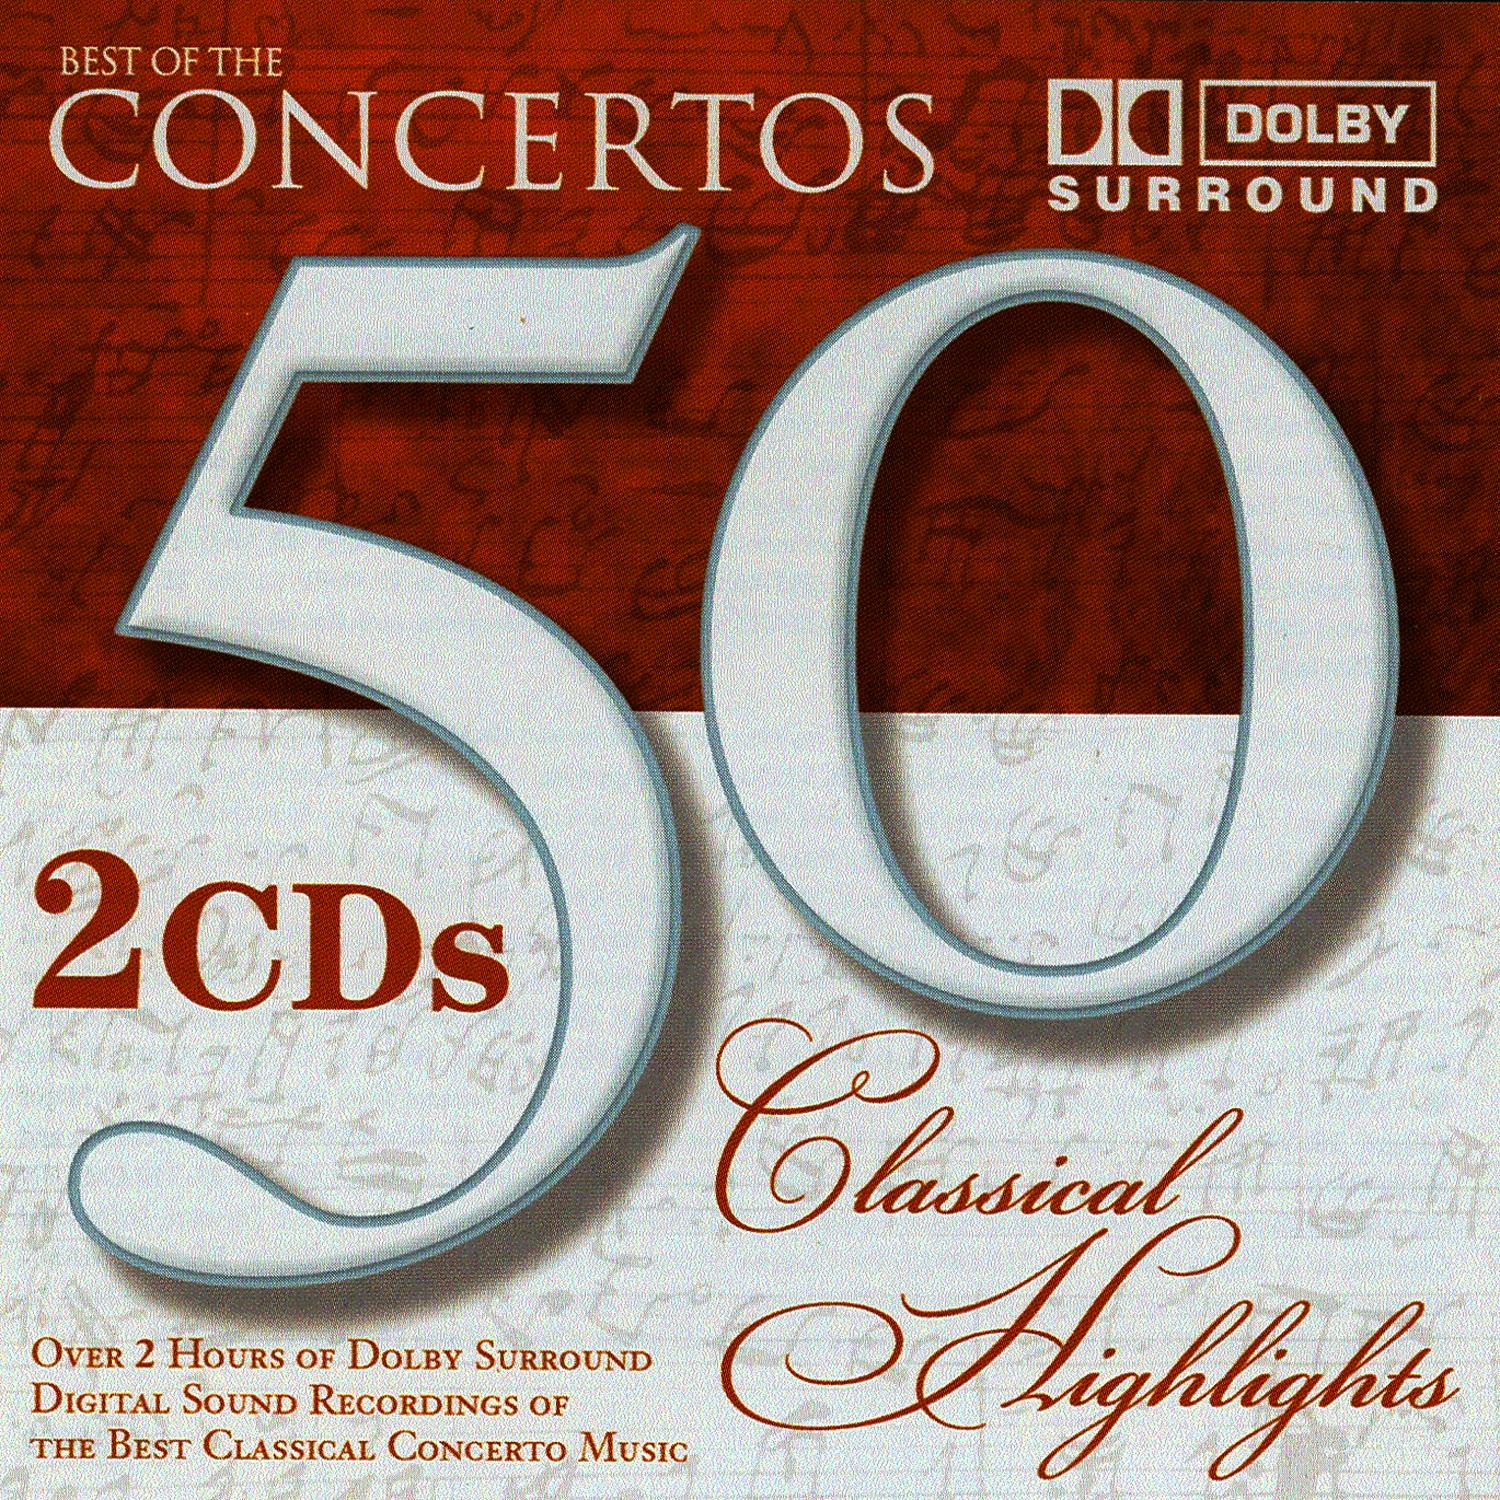 Concerto Grosso No. 1 in G Major - Allegro